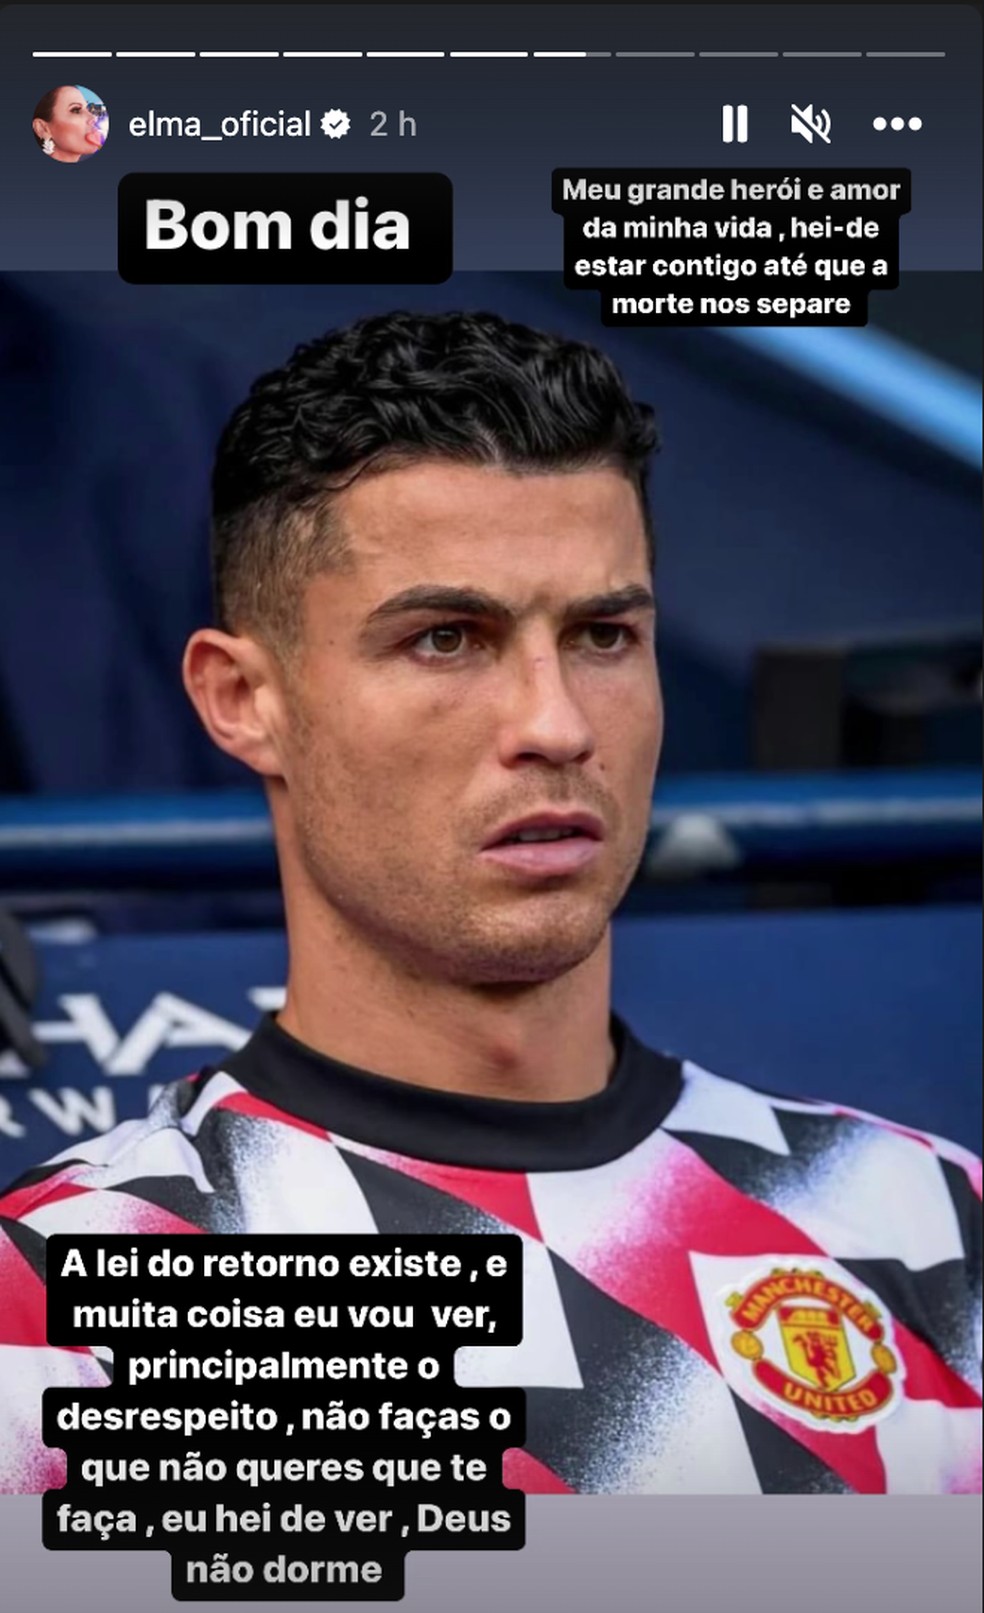 Irmã de Cristiano Ronaldo critica Ten Hag: 